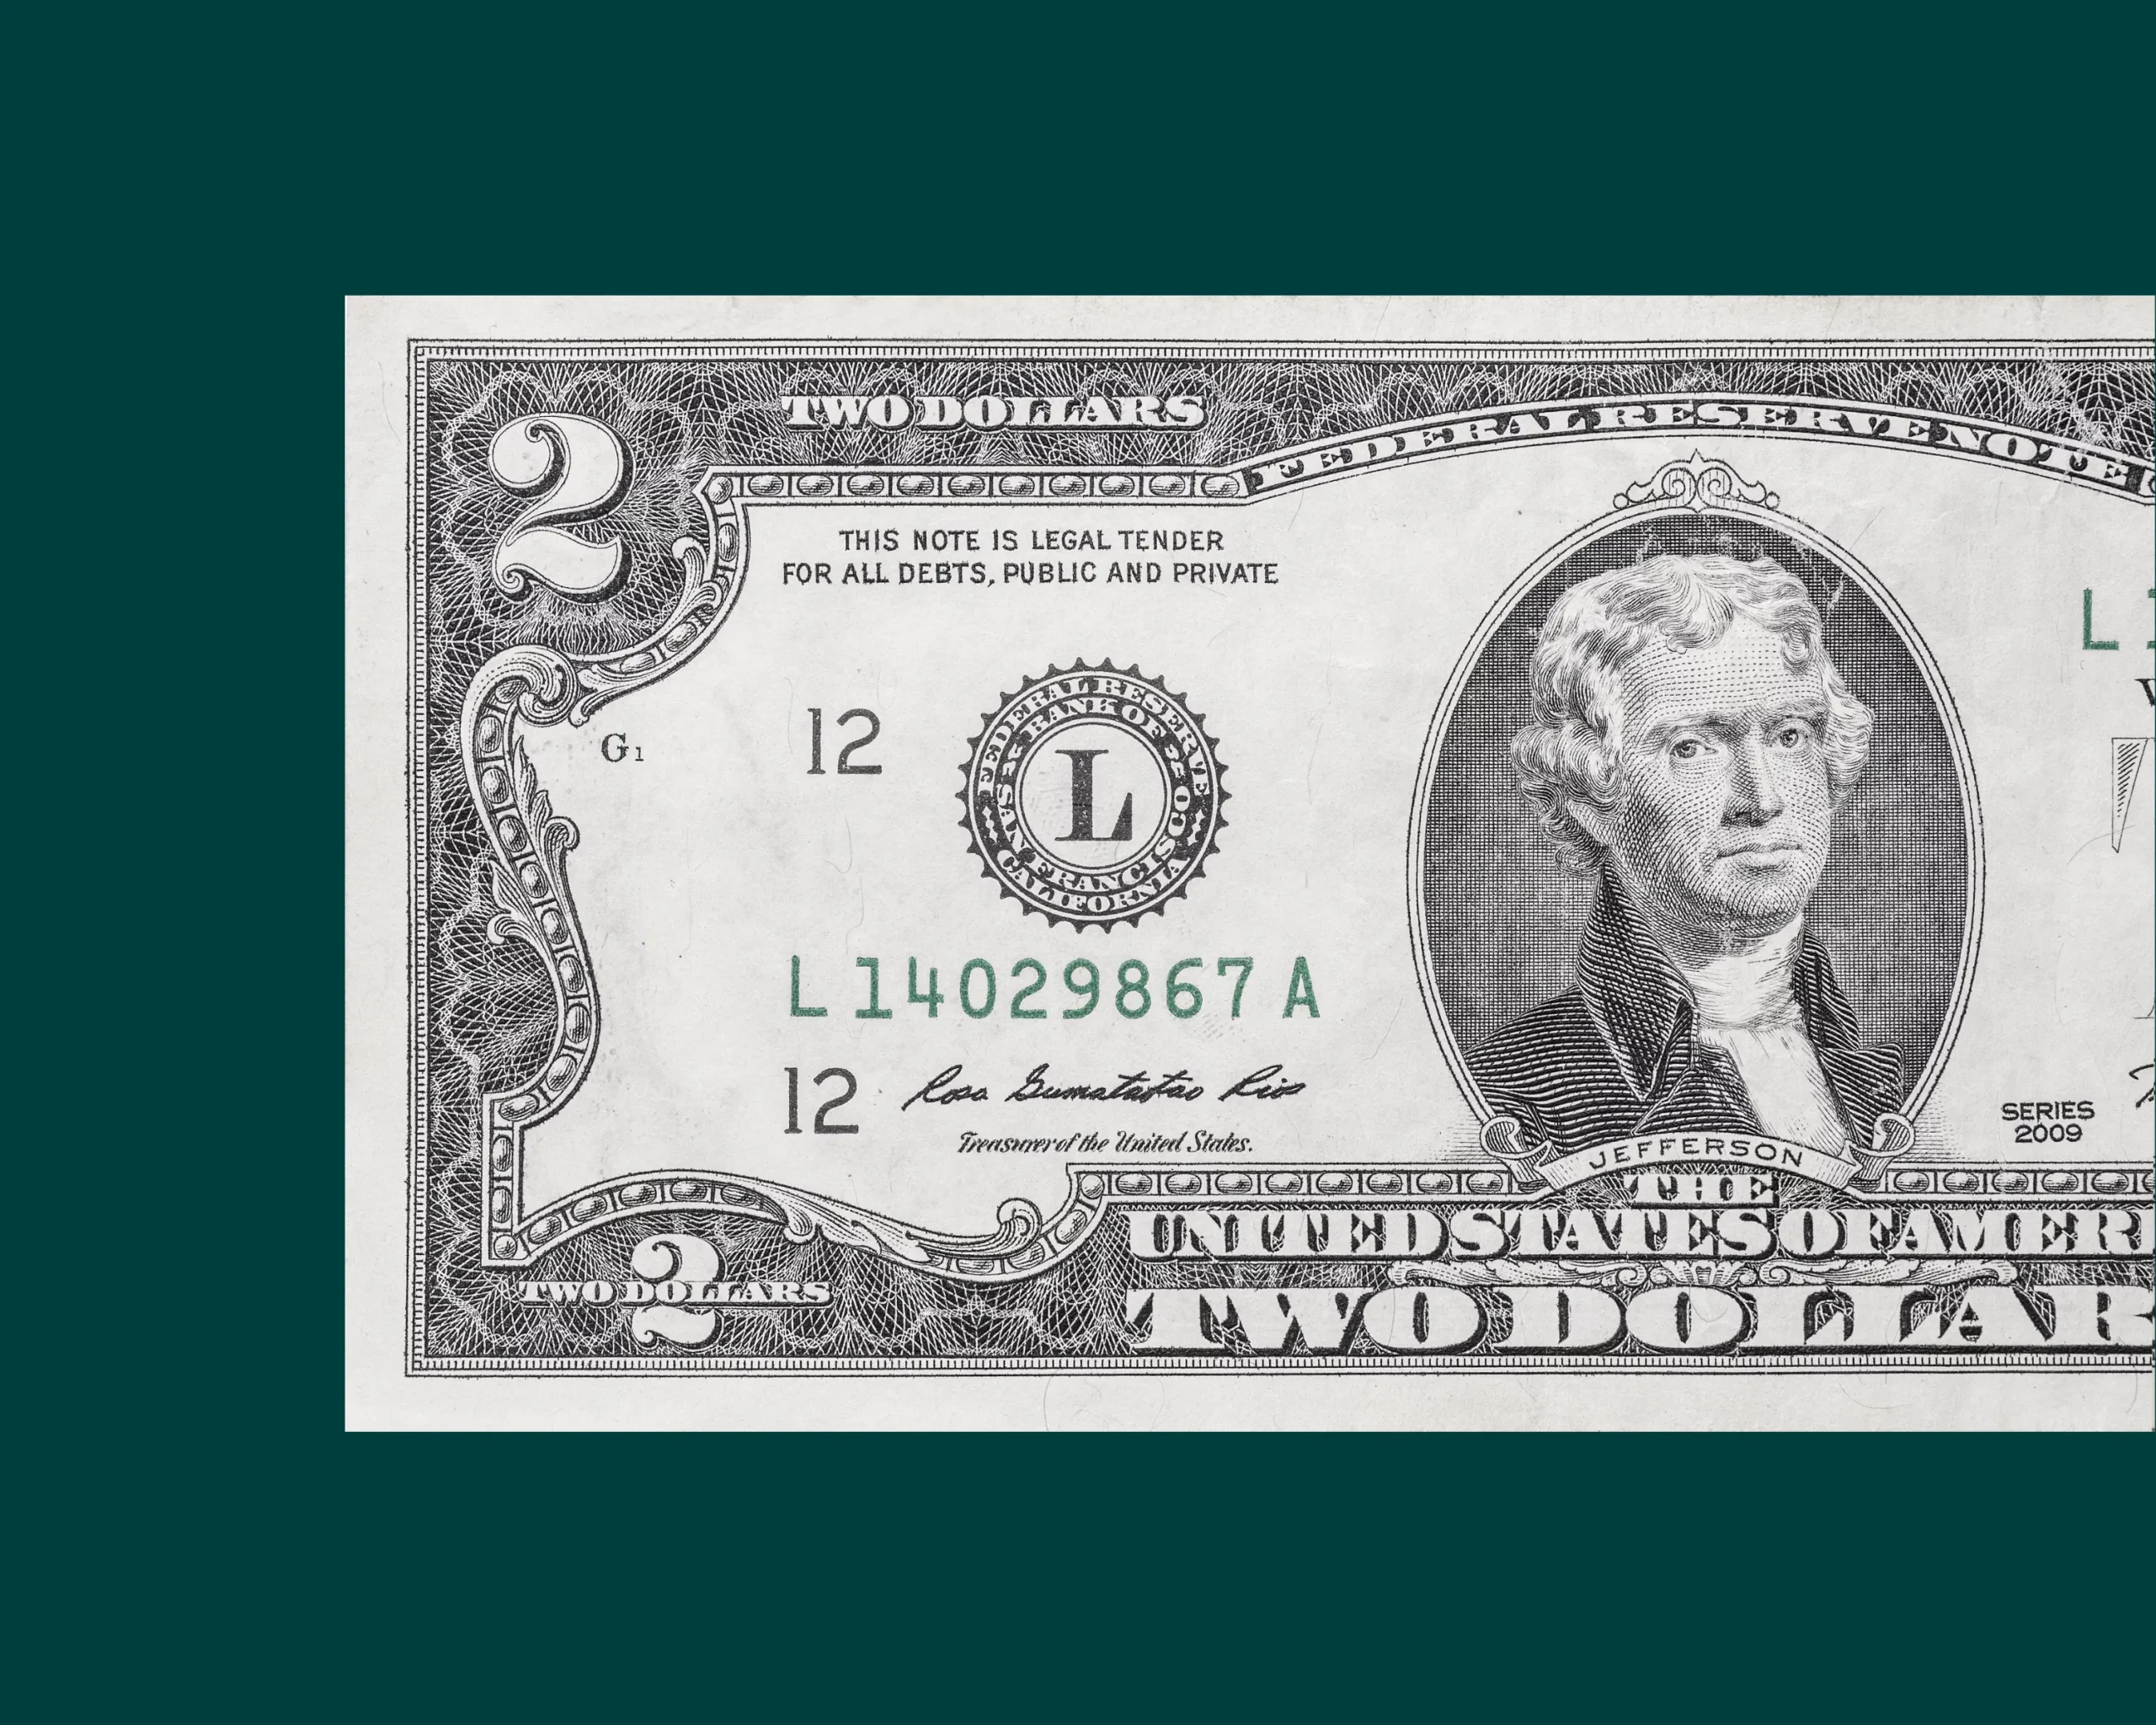 2 Dollar Bill Values - All The Decor